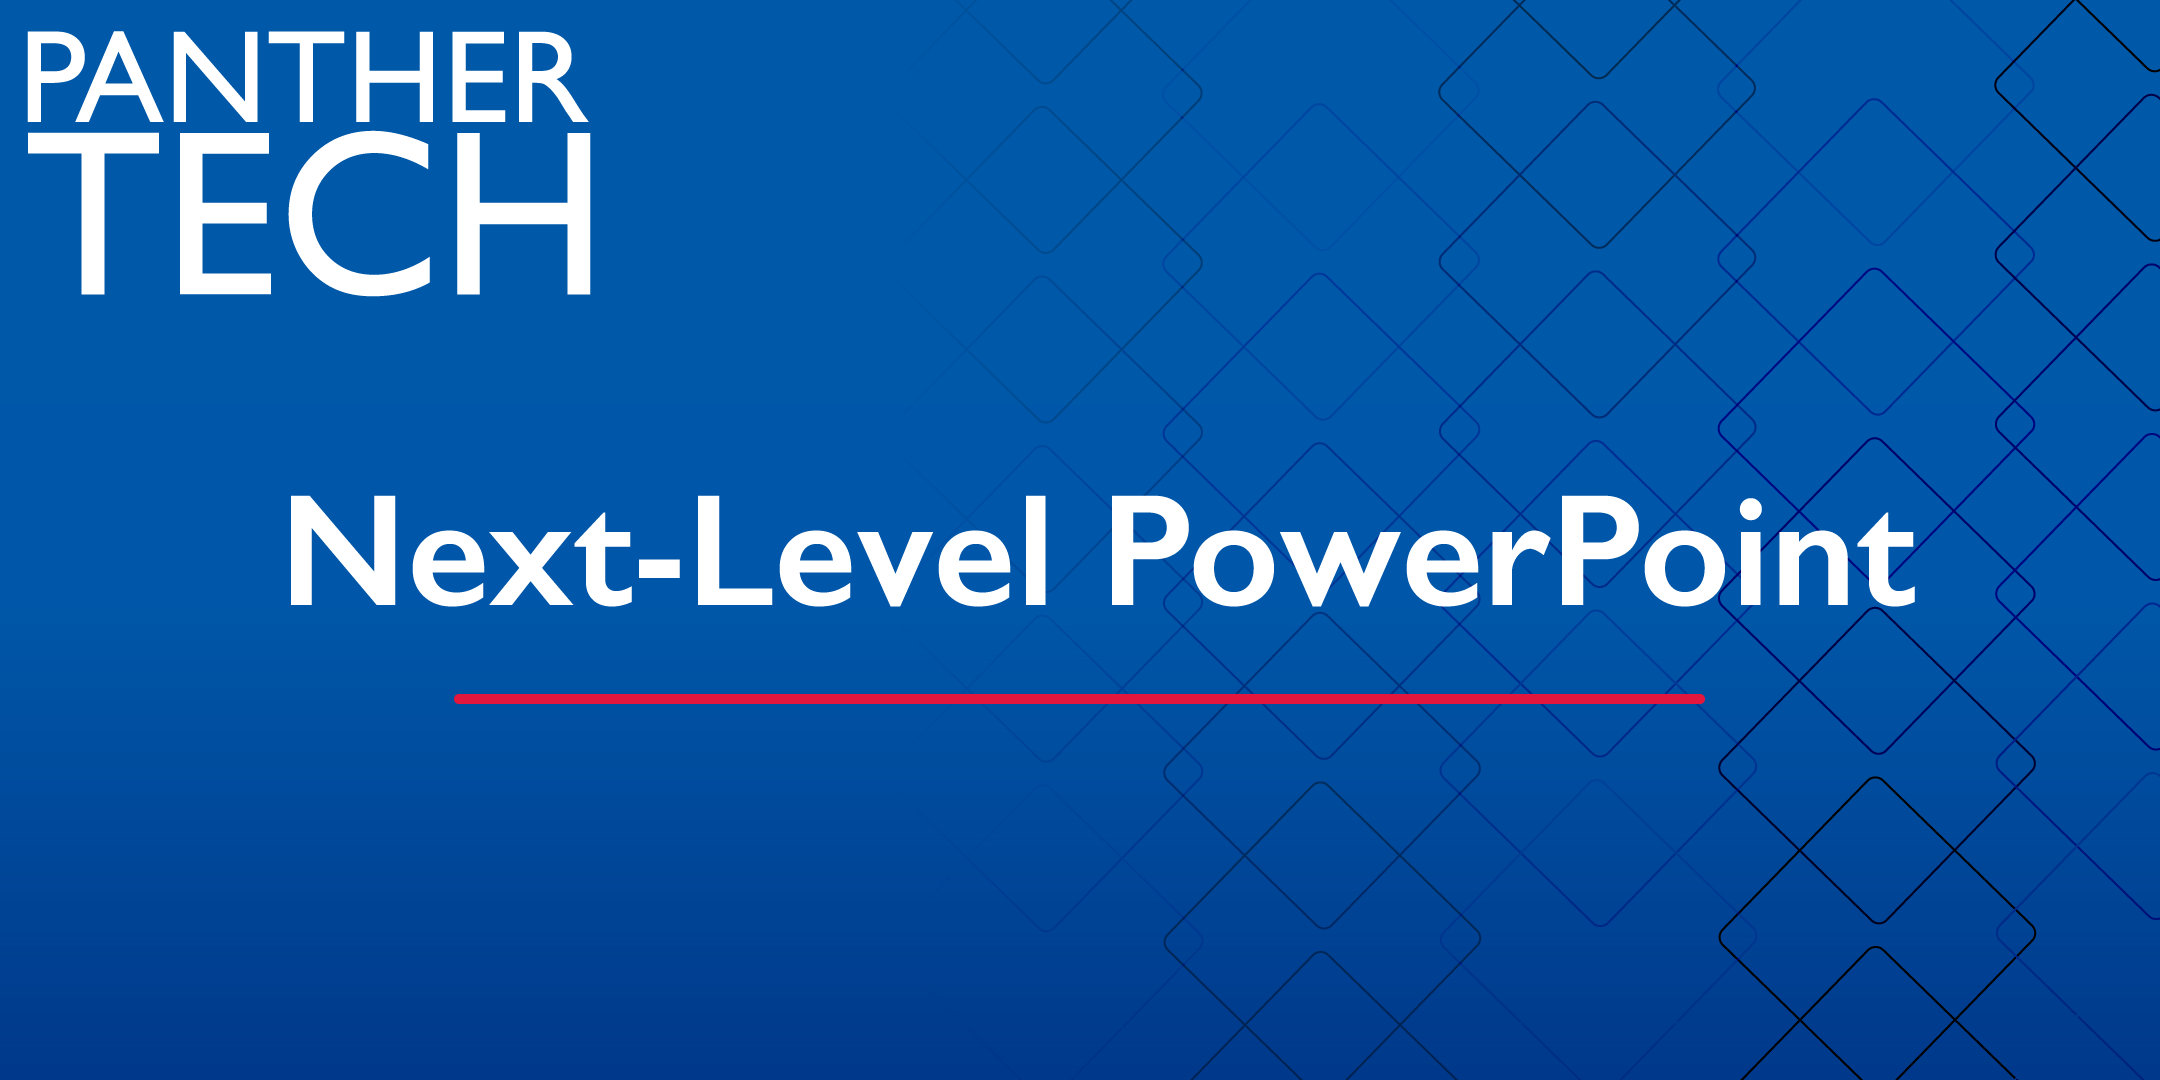 Next-Level PowerPoint - Atlanta - Classroom 403/405